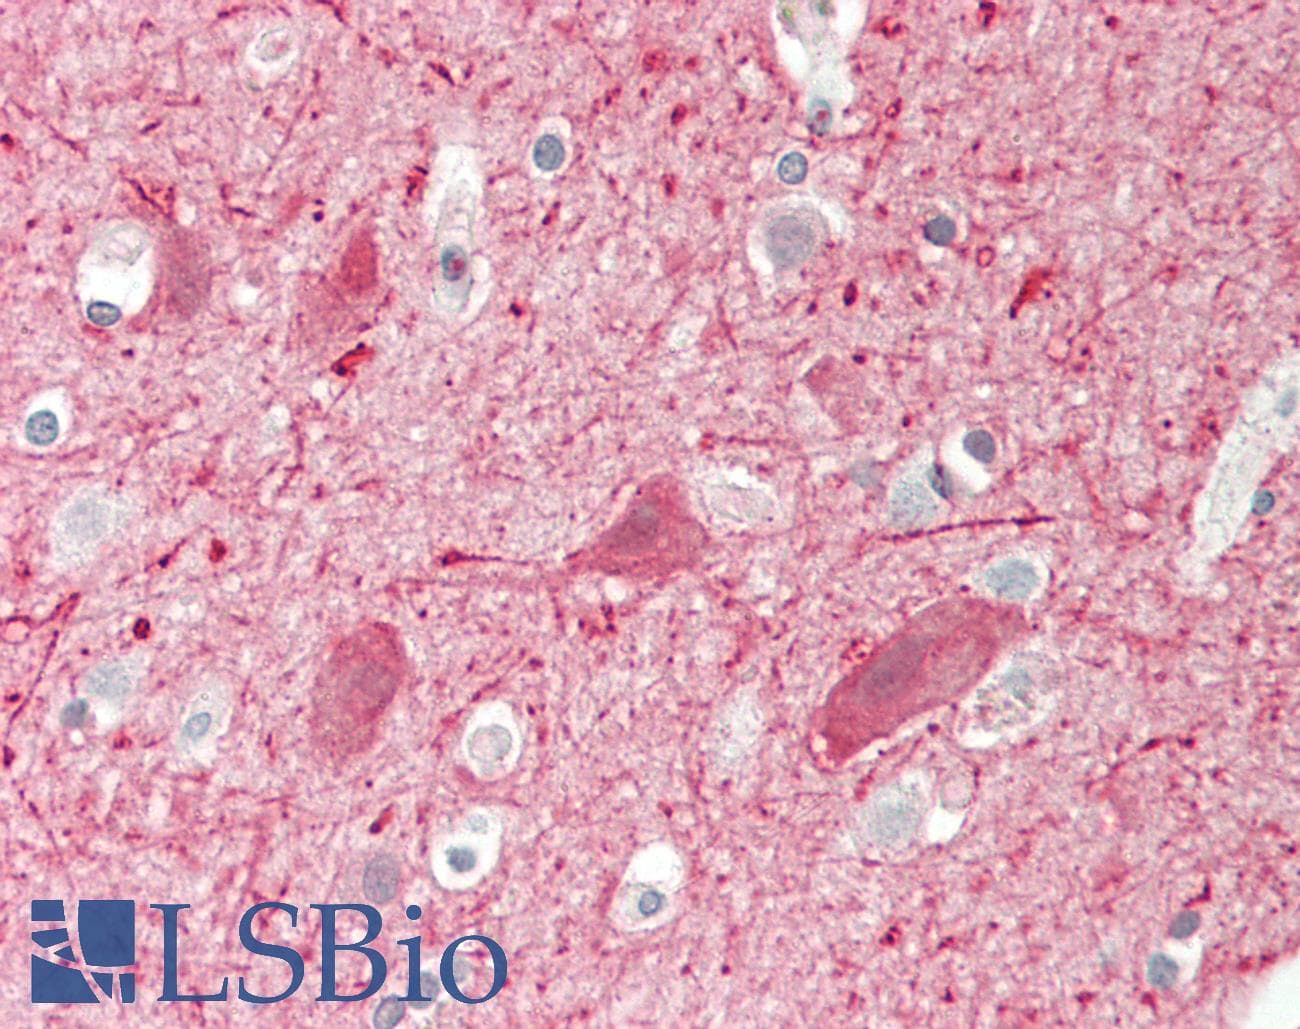 Neurofilament Antibody - Human Brain, Cortex: Formalin-Fixed, Paraffin-Embedded (FFPE)